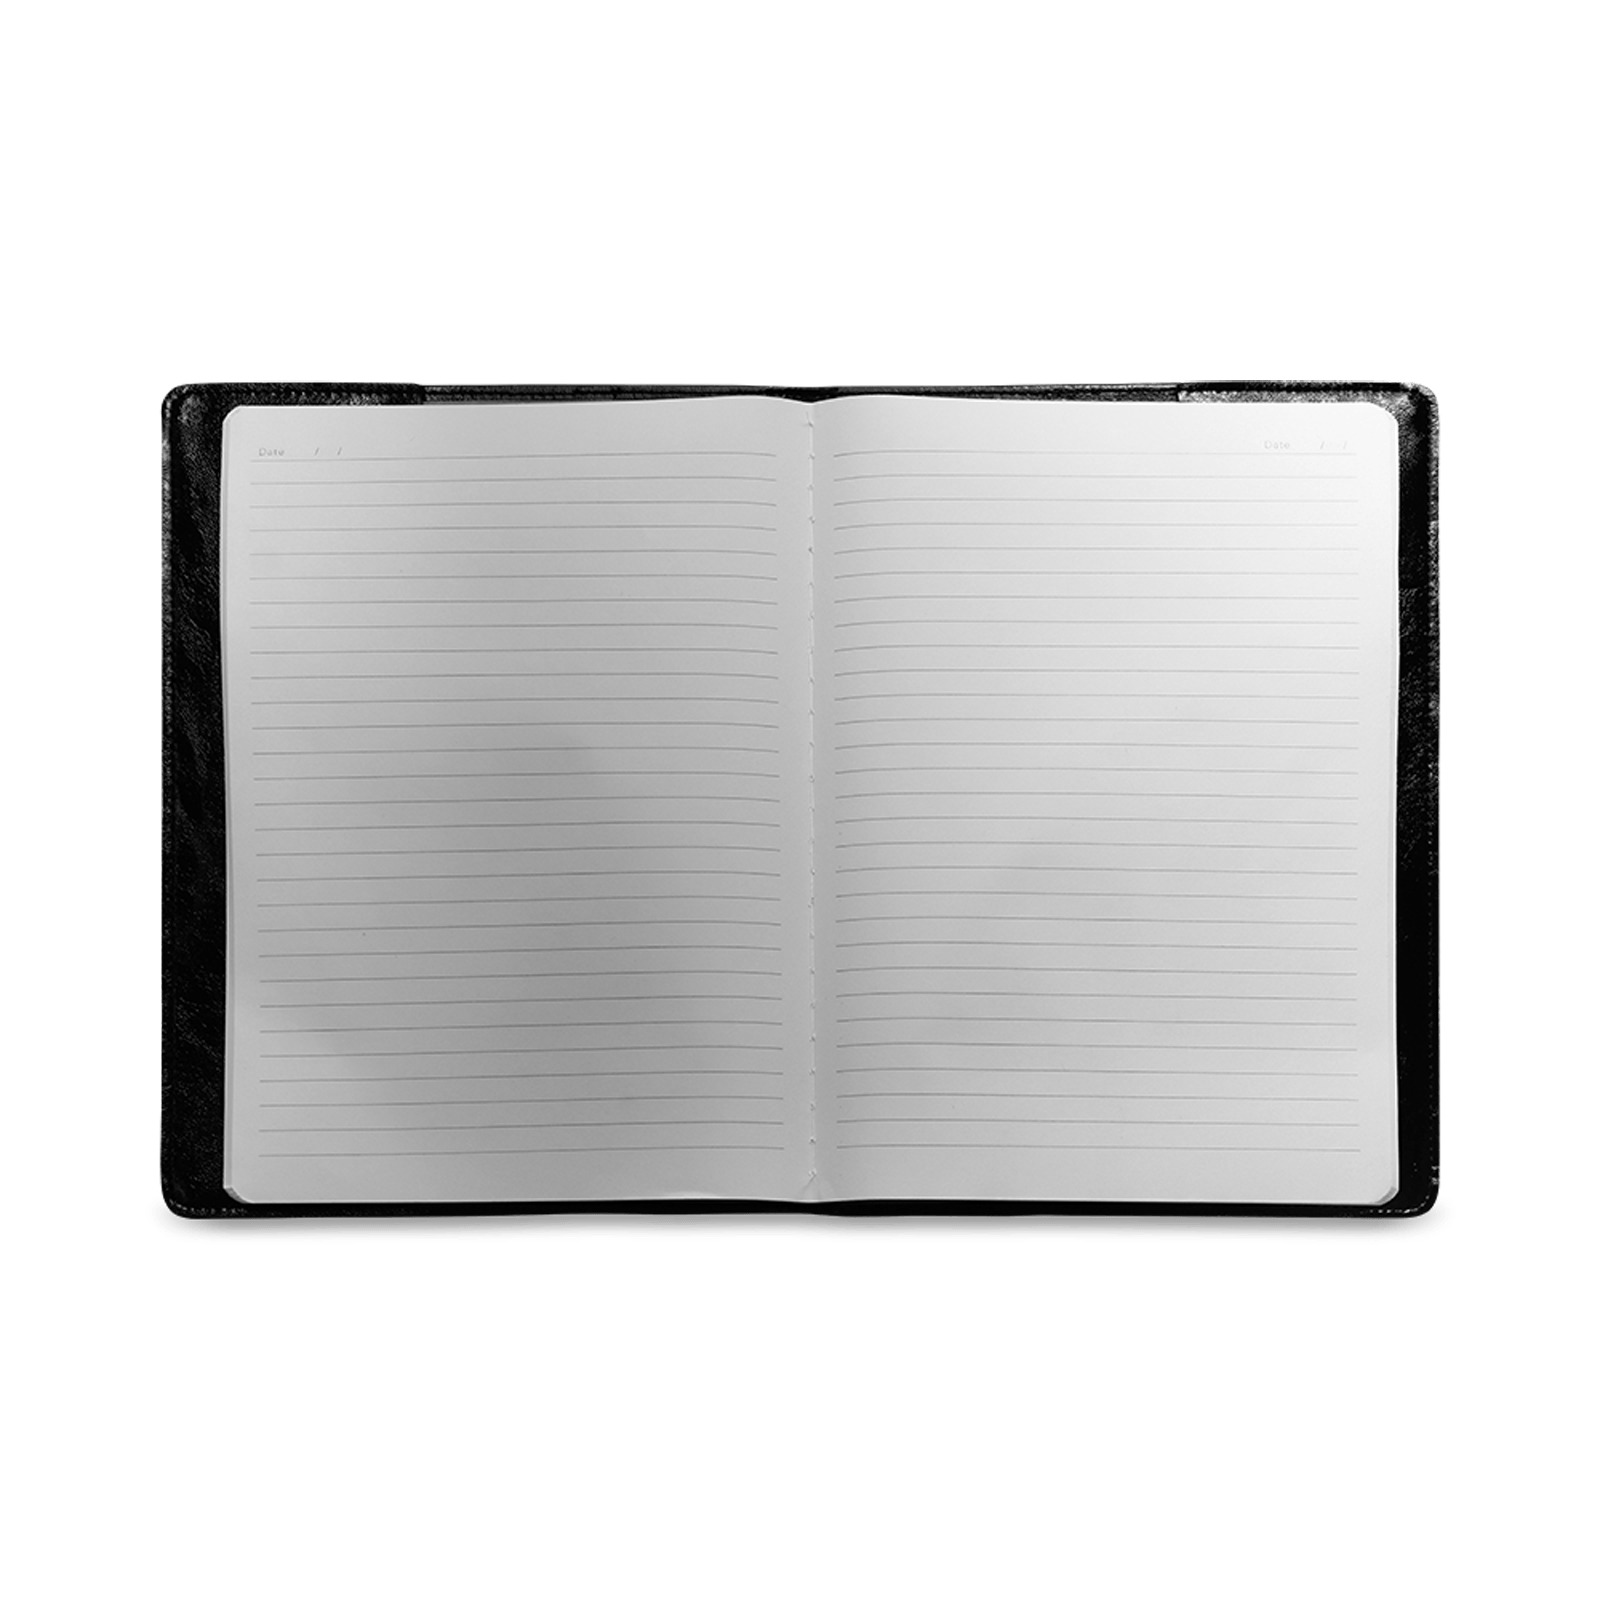 bb hmnb6 Custom NoteBook B5